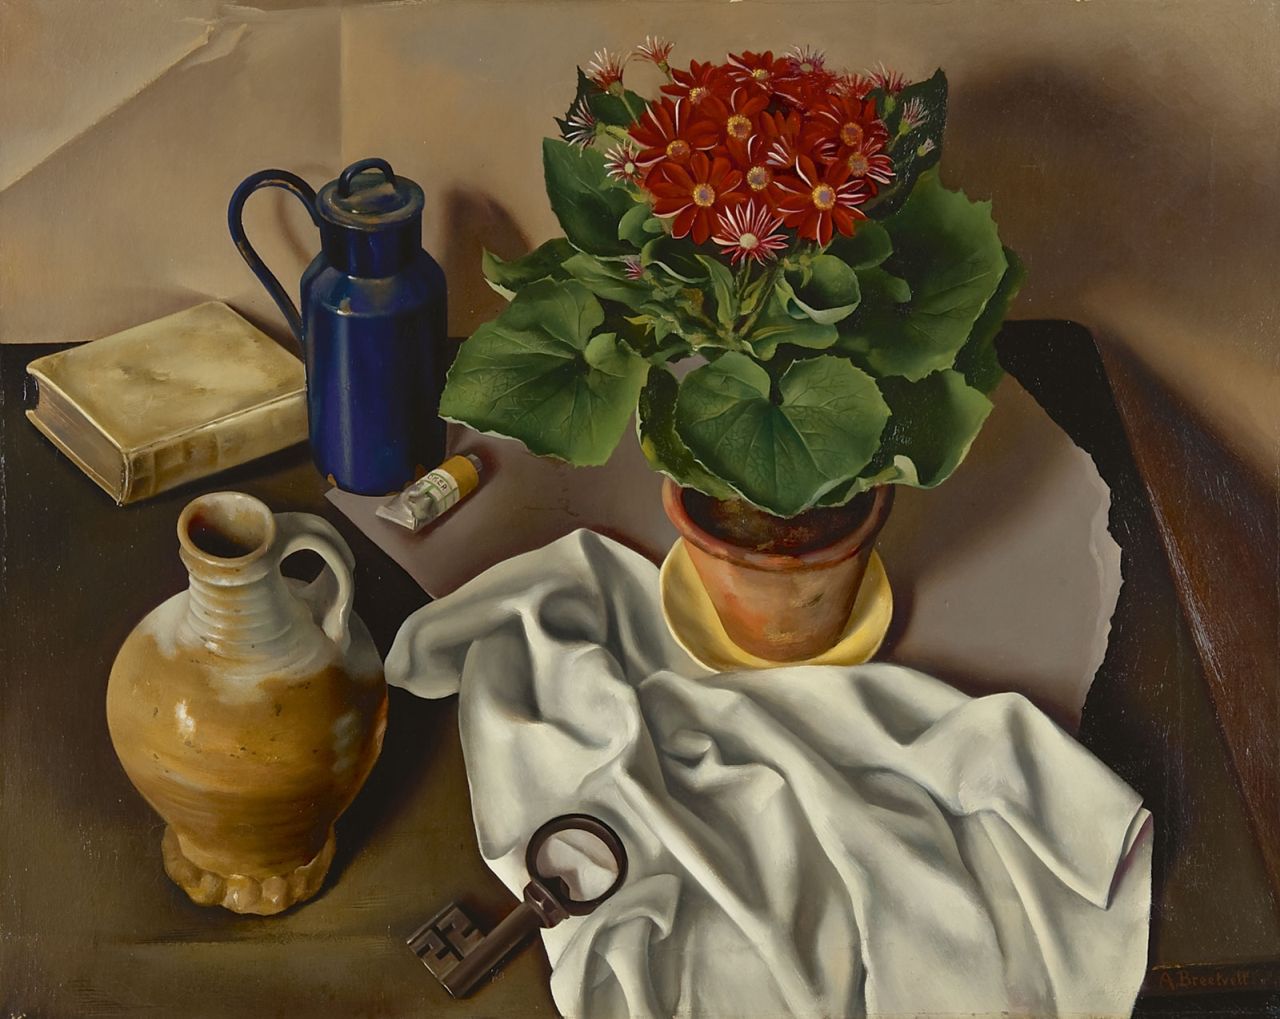 Breetvelt A.  | Adolf 'Dolf' Breetvelt, A still life with a plant, jug and key, oil on canvas 60.4 x 75.1 cm, signed l.r. and dated '22 (key)